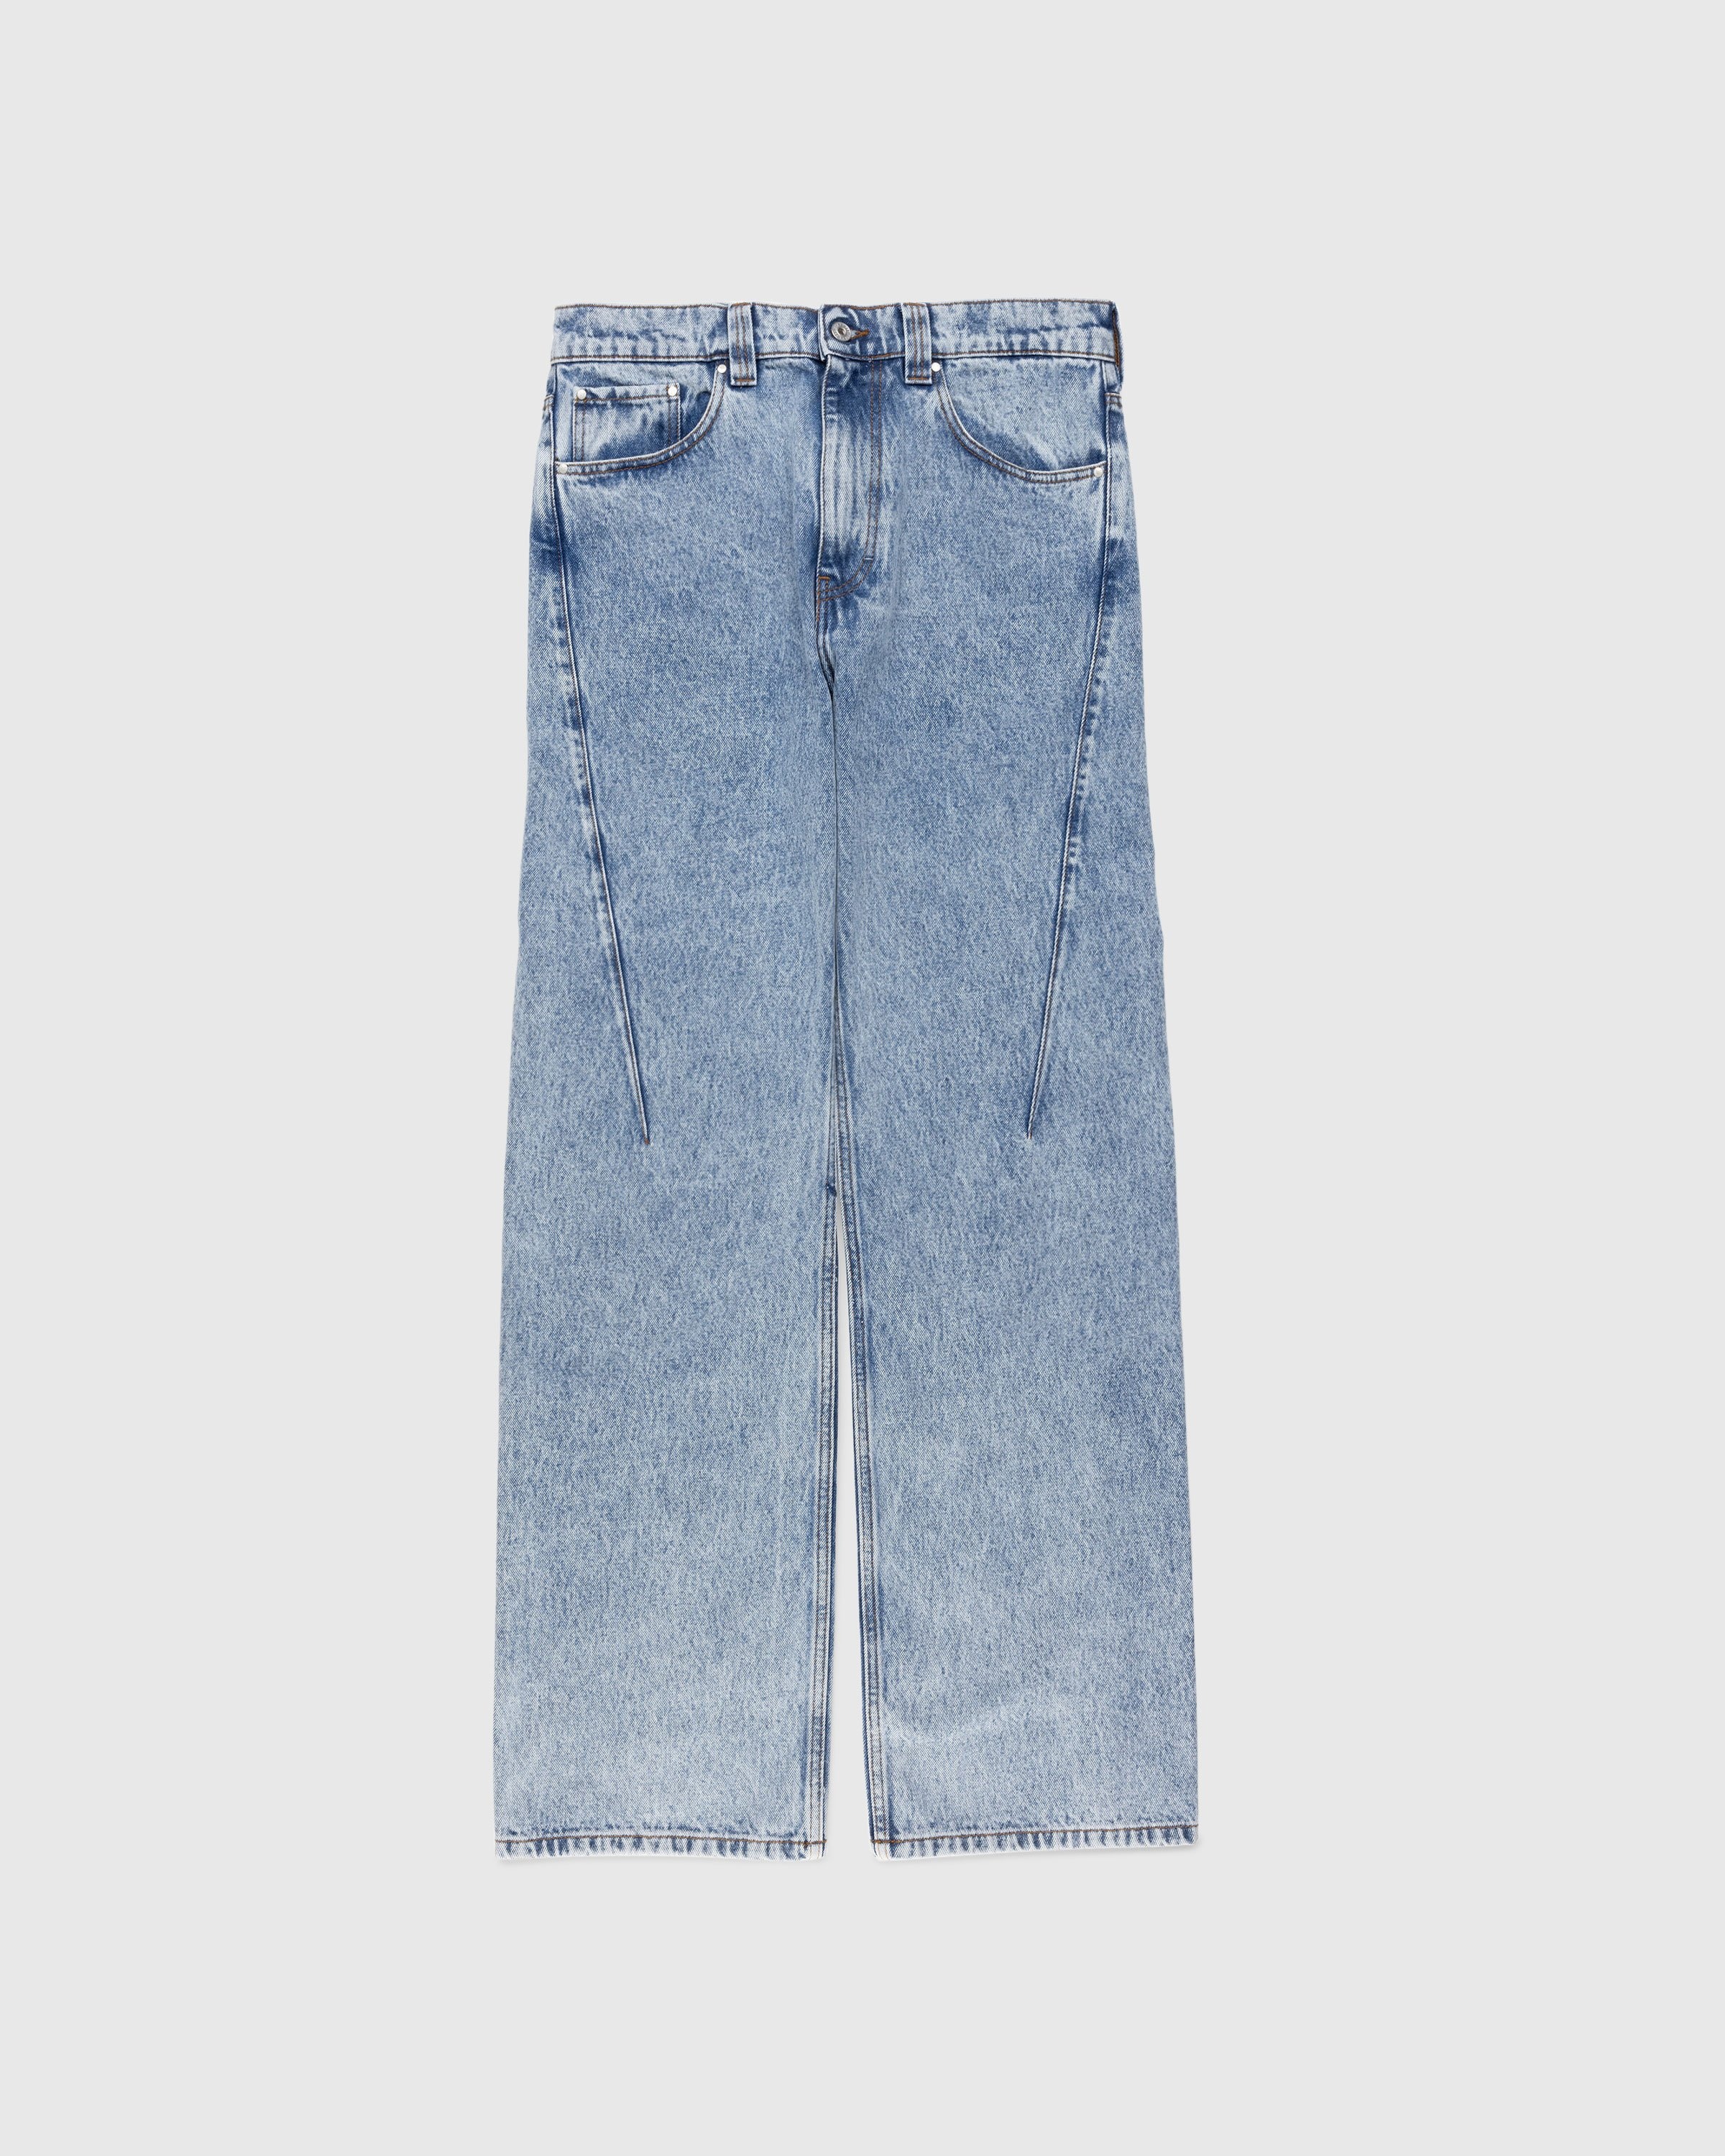 Y/Project – Paris' Best Jeans Light Ice Blue | Highsnobiety Shop